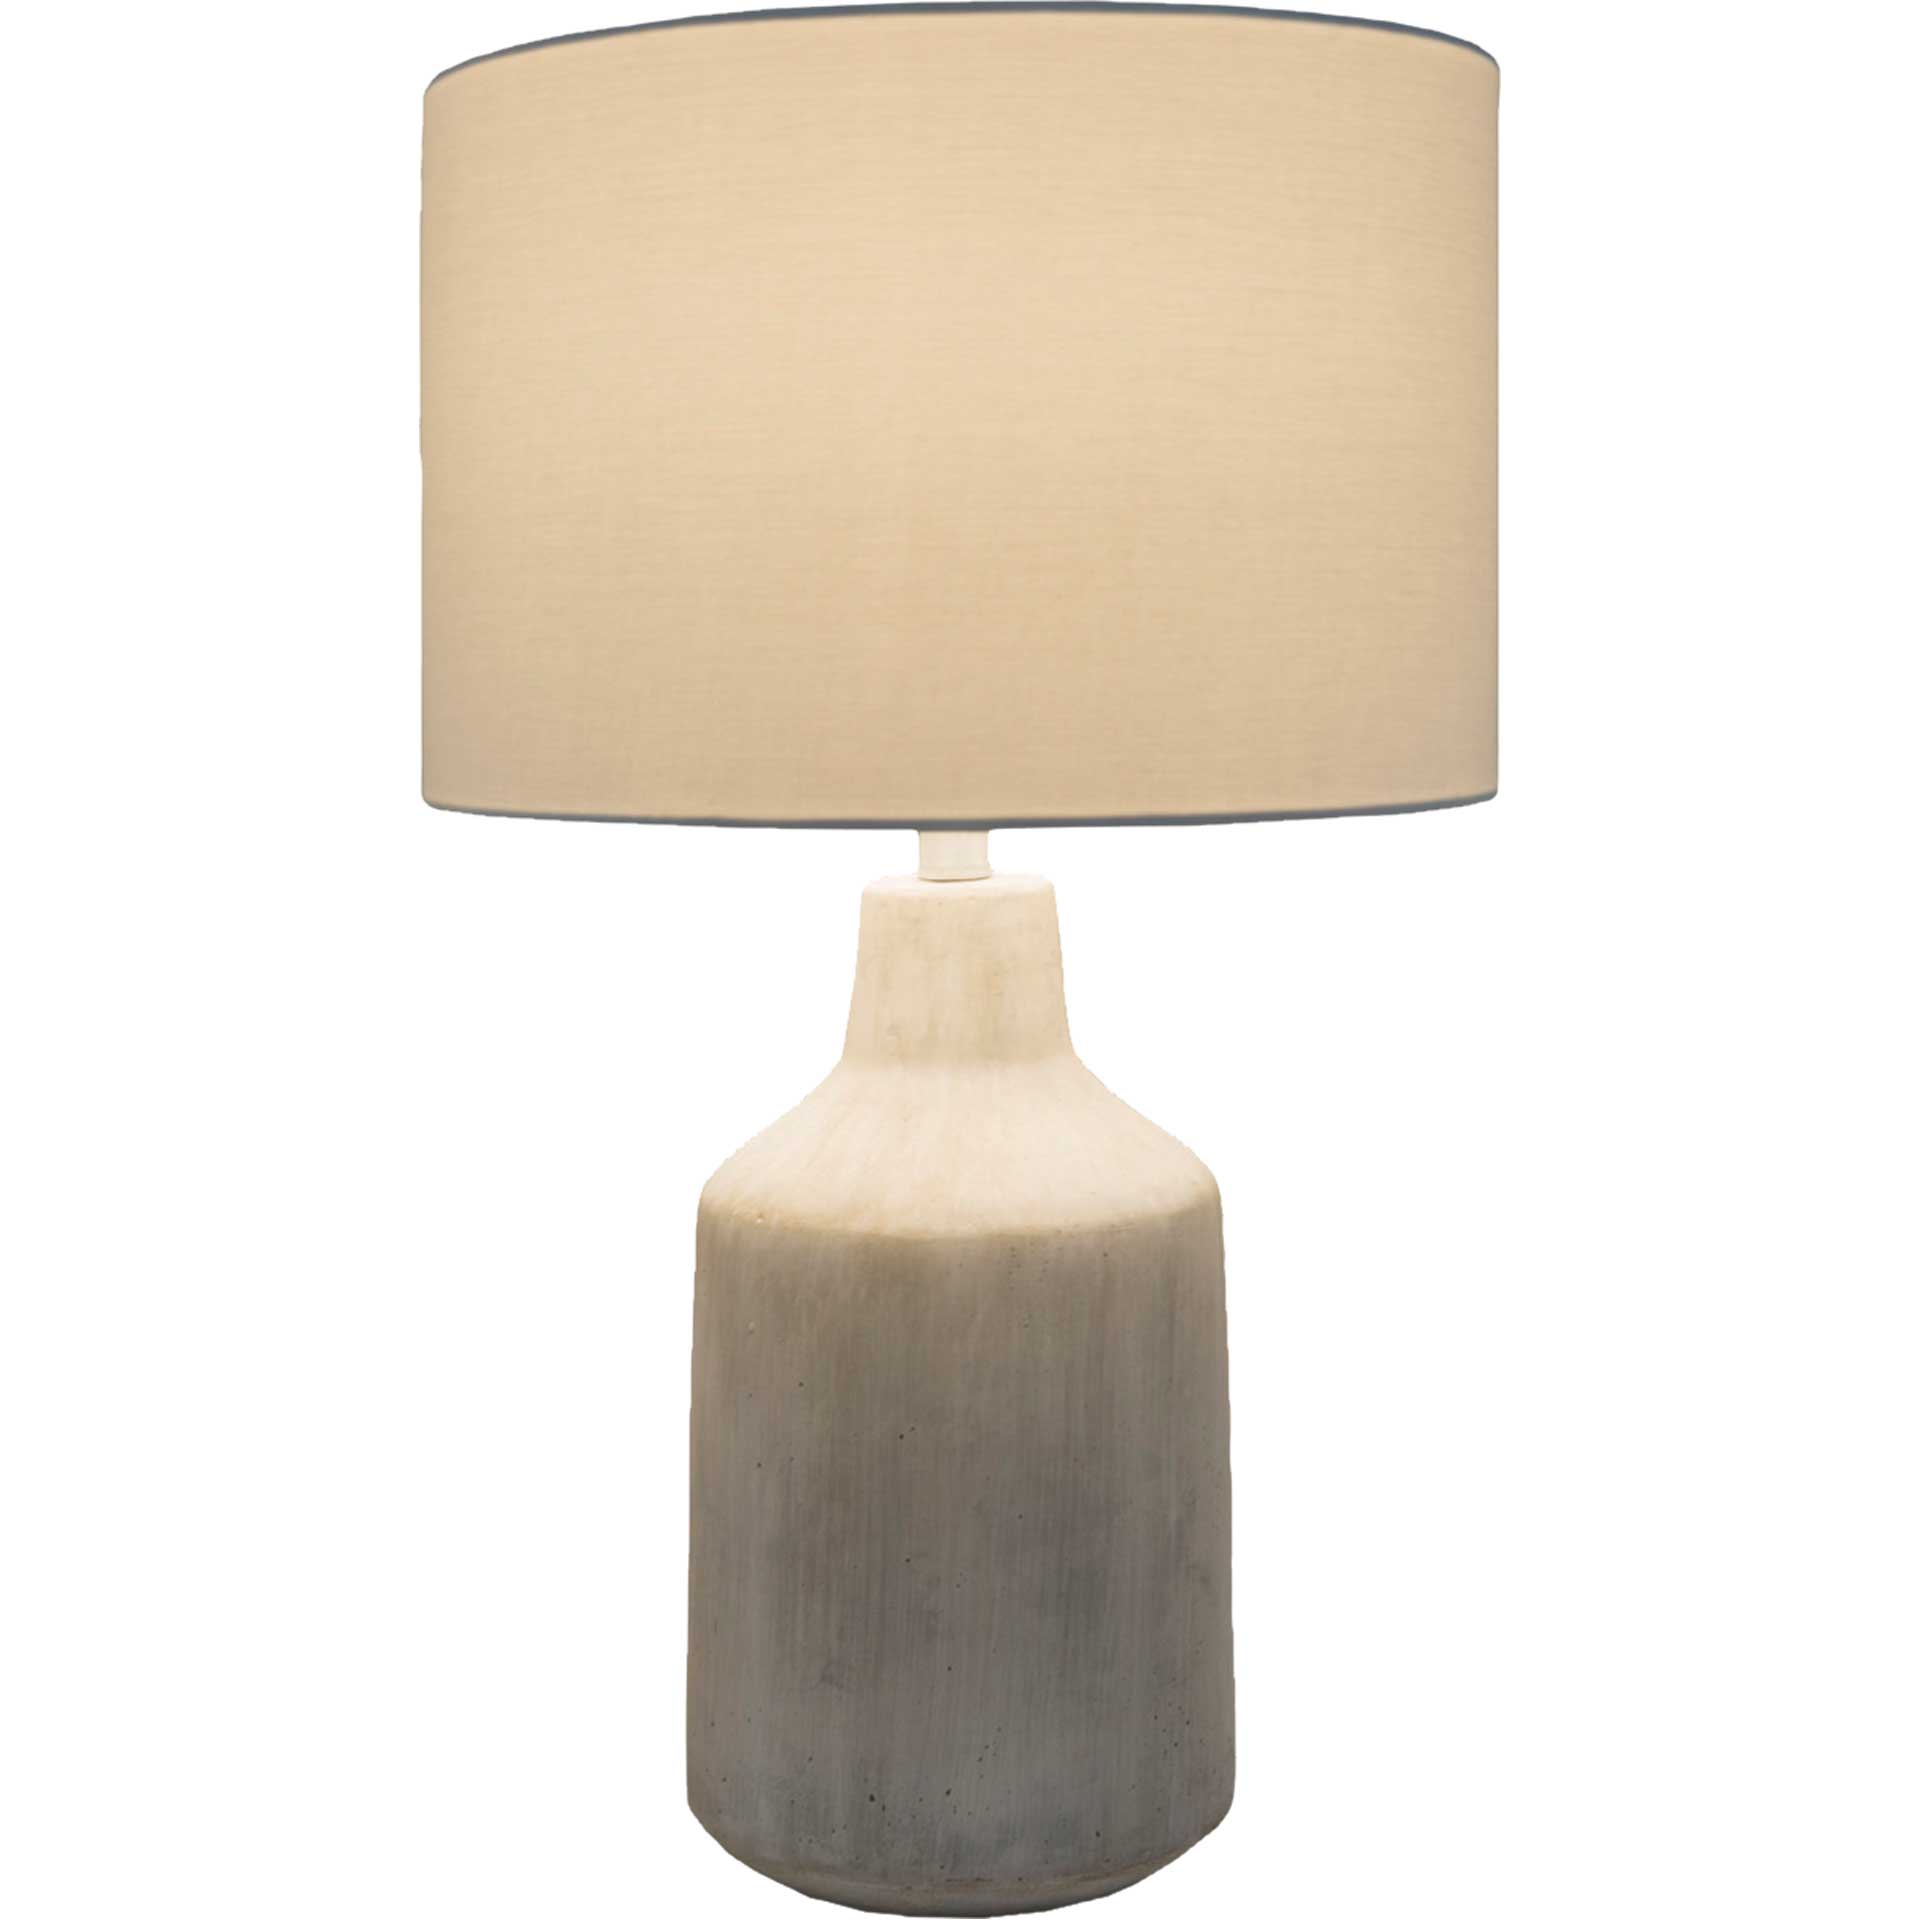 Forrest Table Lamp Ivory/Light Gray/Beige